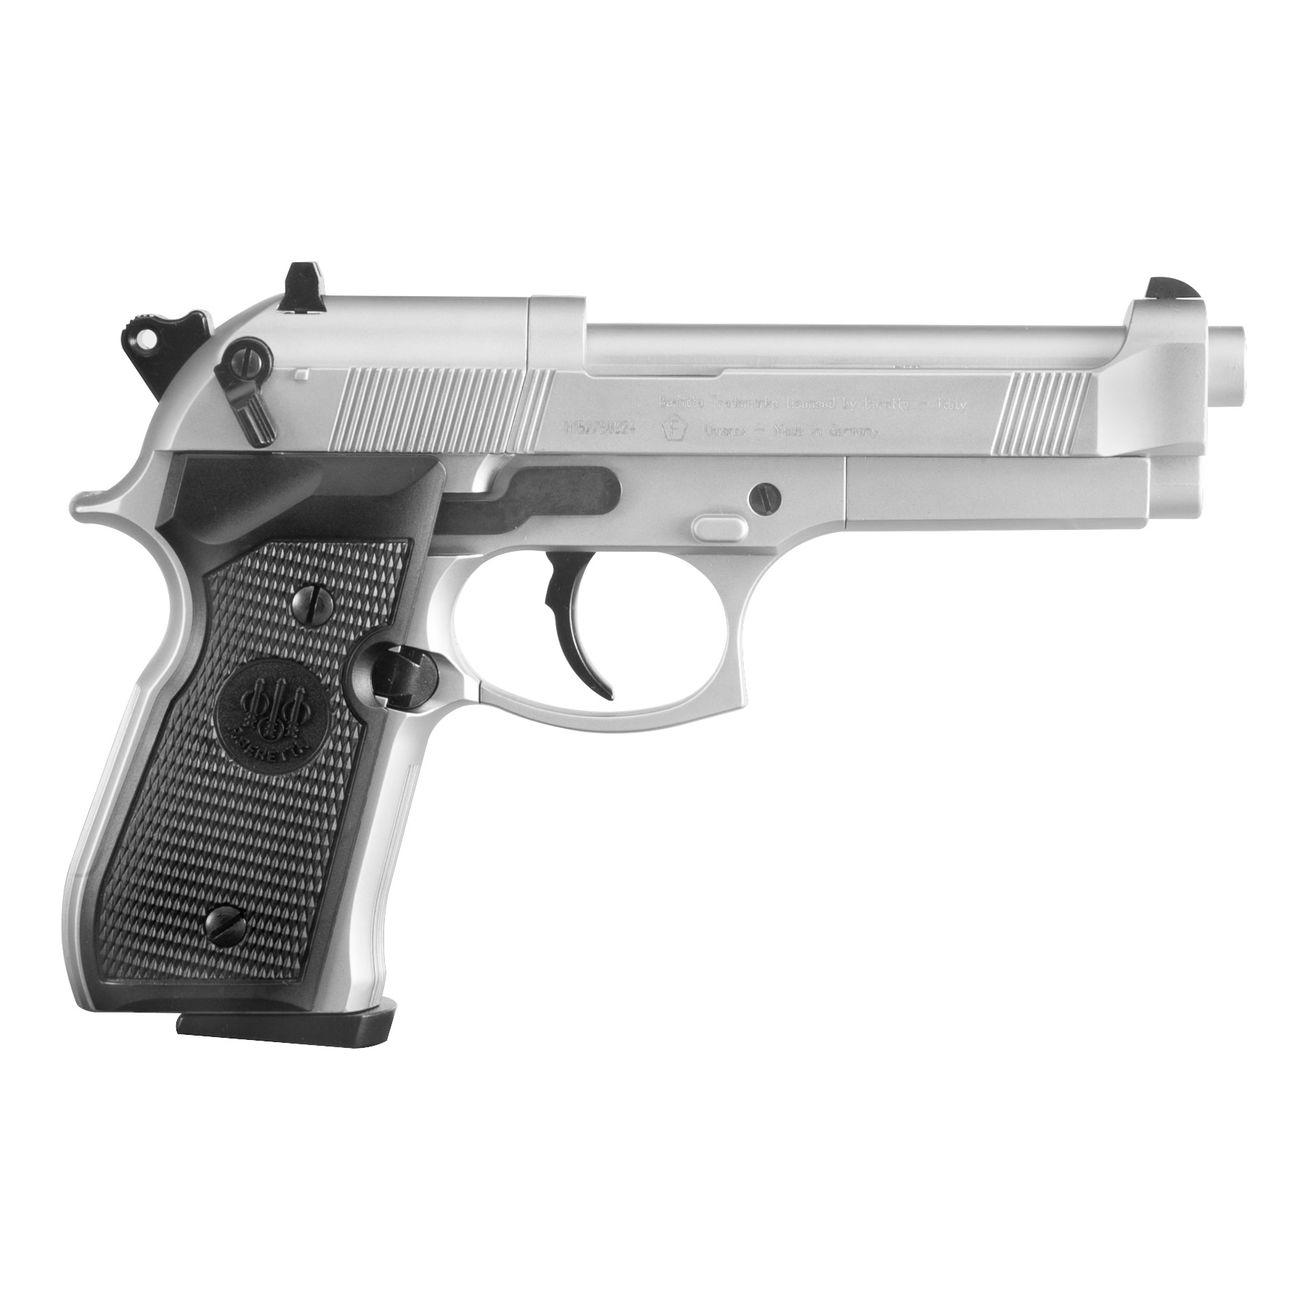 Beretta M92 FS CO2 Pistole 4,5mm (.177) Diabolo vernickelt mit Kunststoffgriffschalen Bild 1